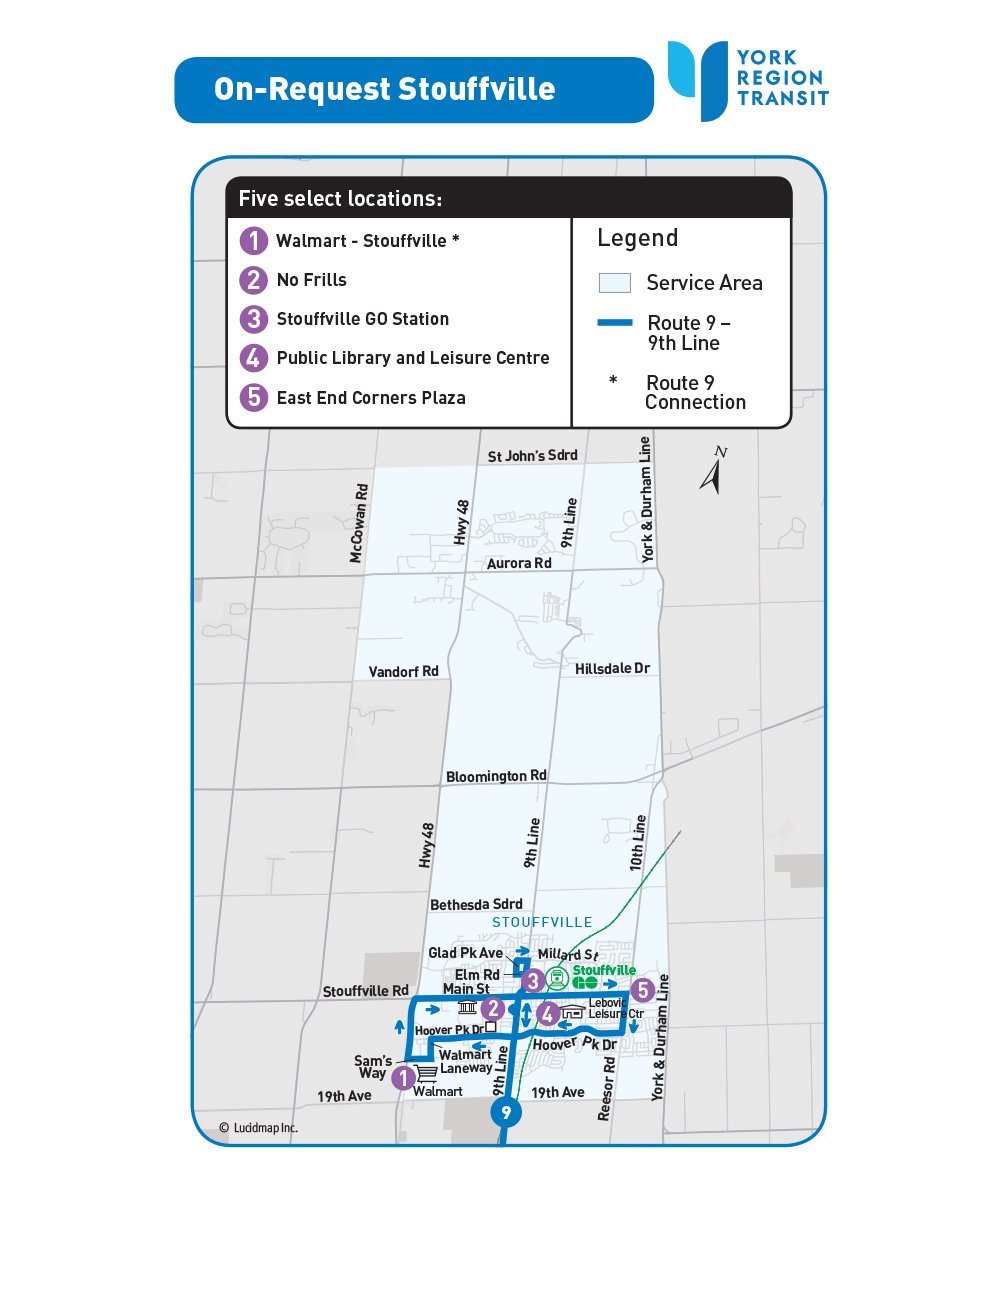 On-Request Stouffville service area map